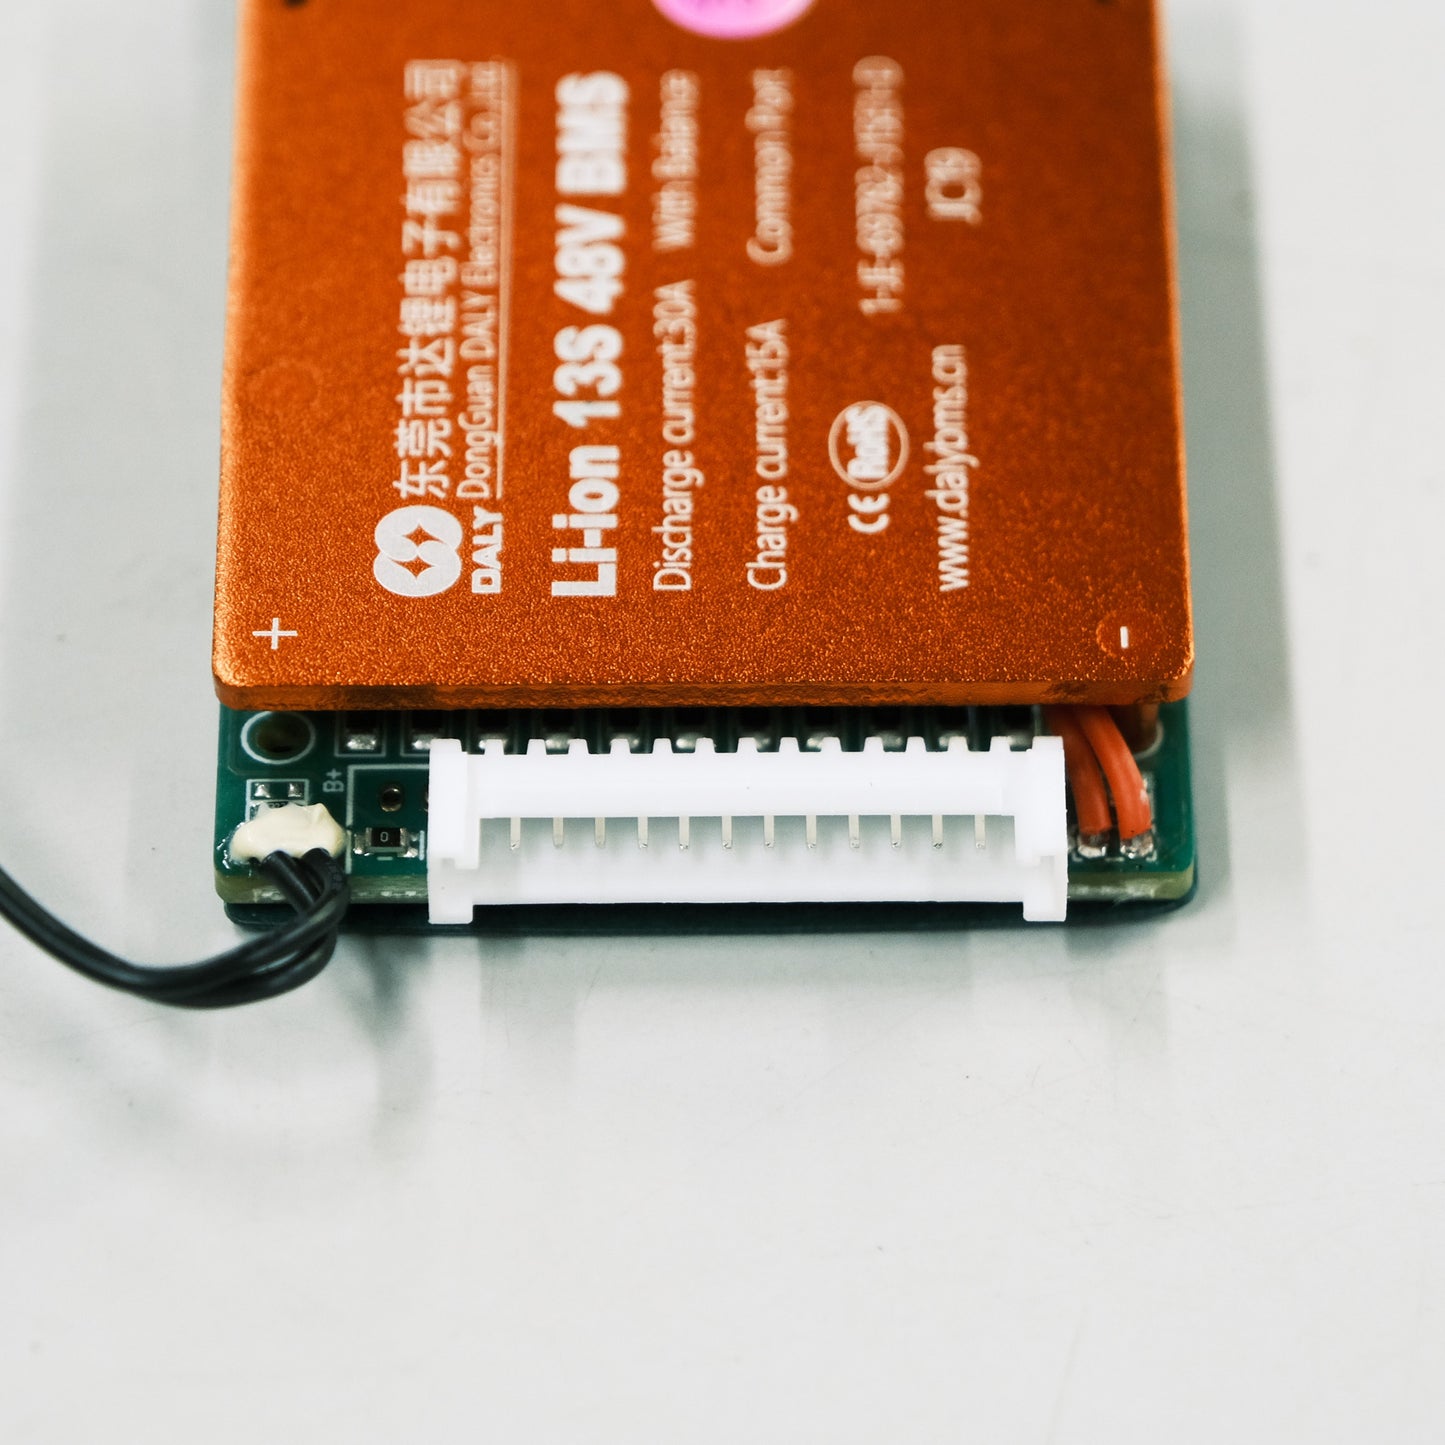 13S 30A Small Size DALY BMS - w Temp Probe + Switch Wires